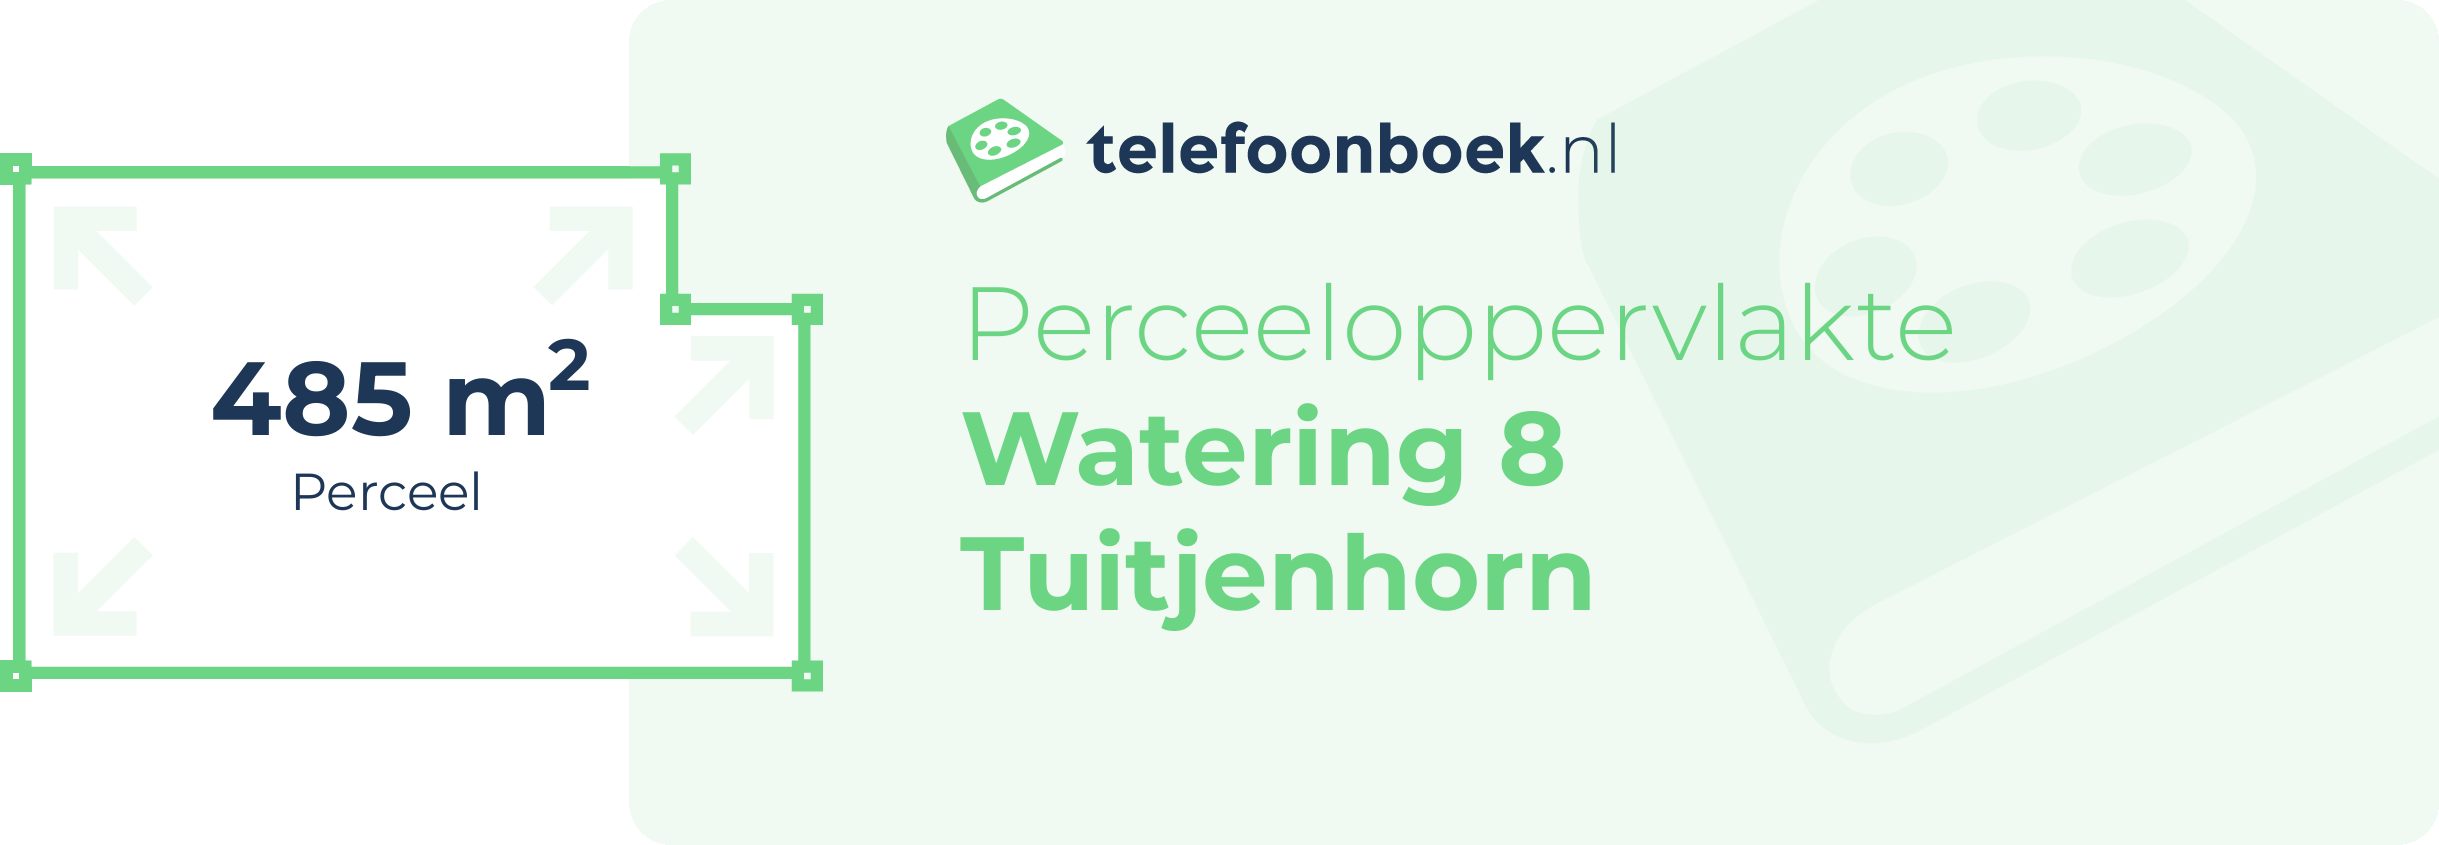 Perceeloppervlakte Watering 8 Tuitjenhorn